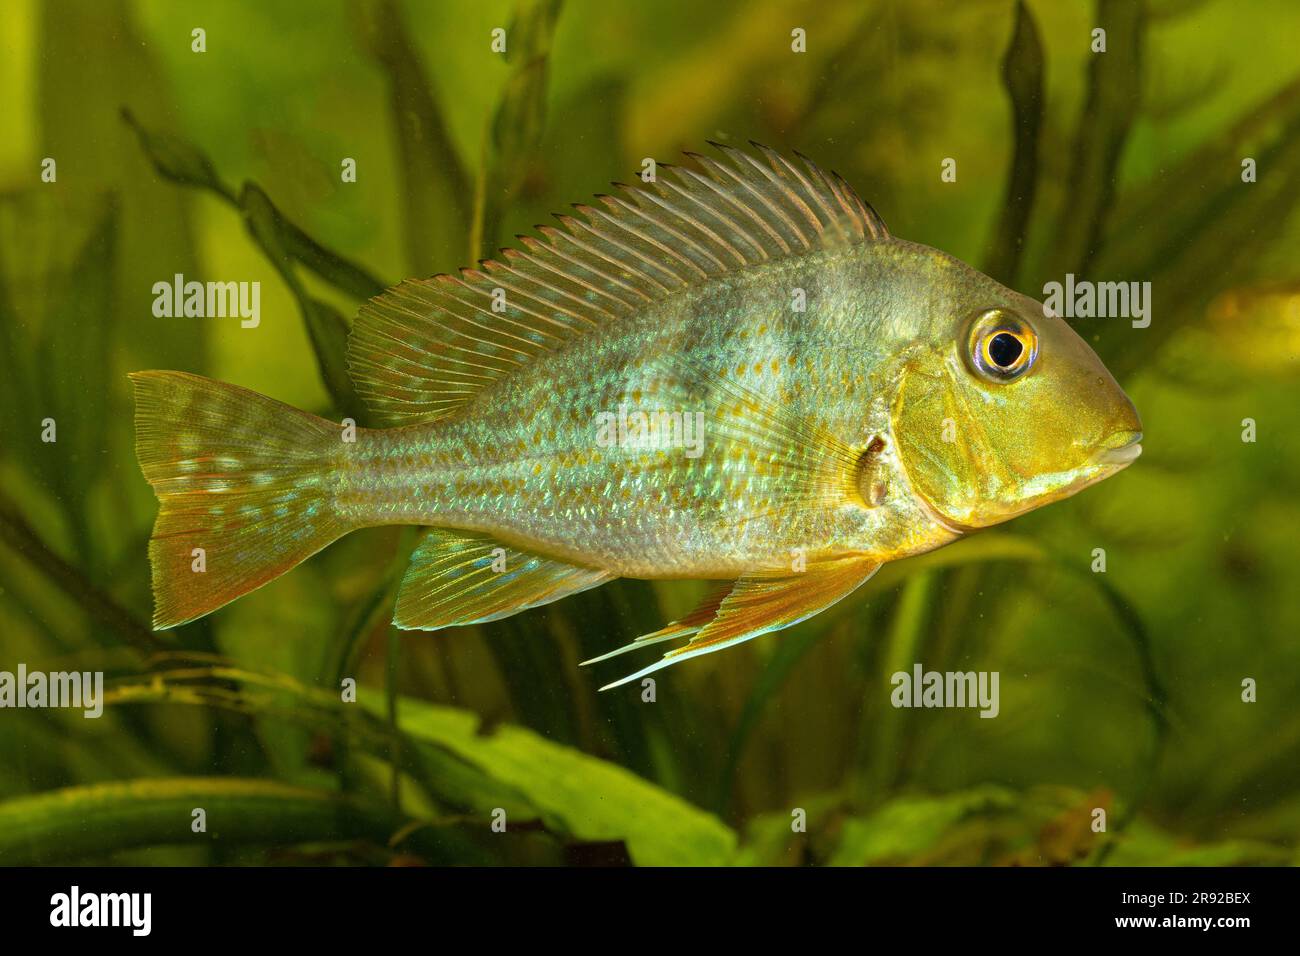 Surinam pearl cichlid, Surinam Geophagus (Geophagus surinamensis), swimming, side view Stock Photo